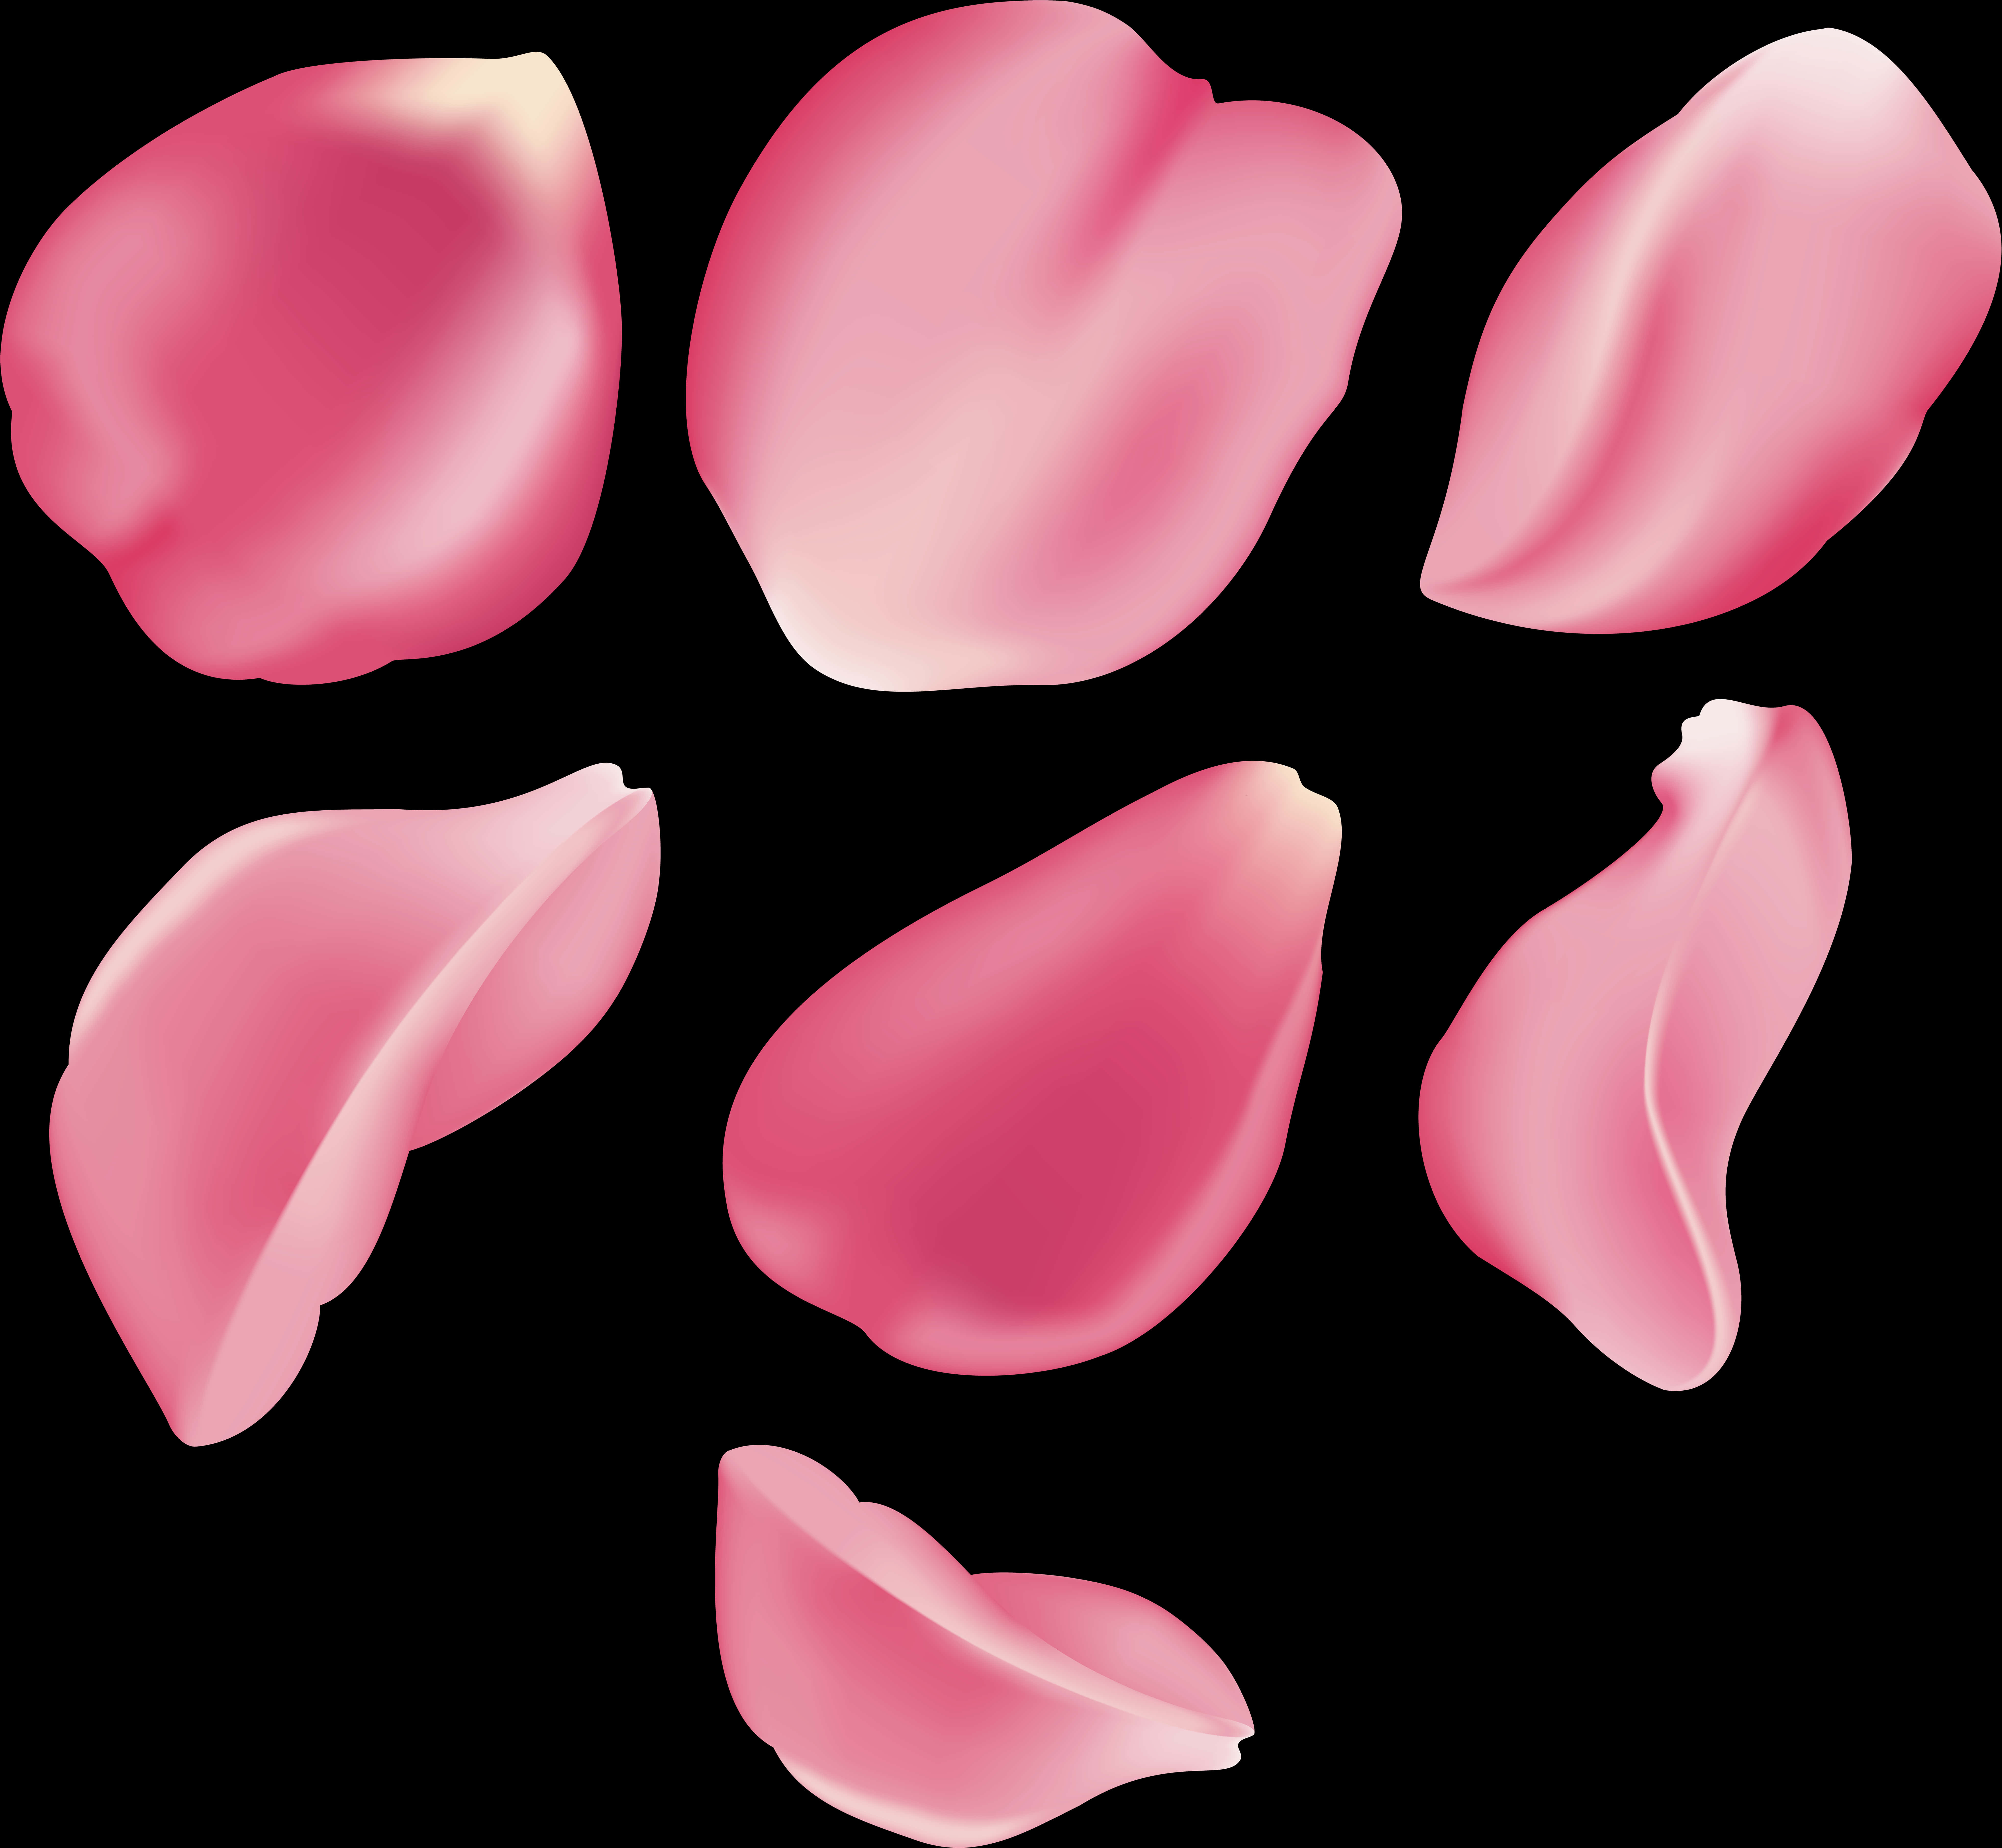 A Group Of Pink Petals